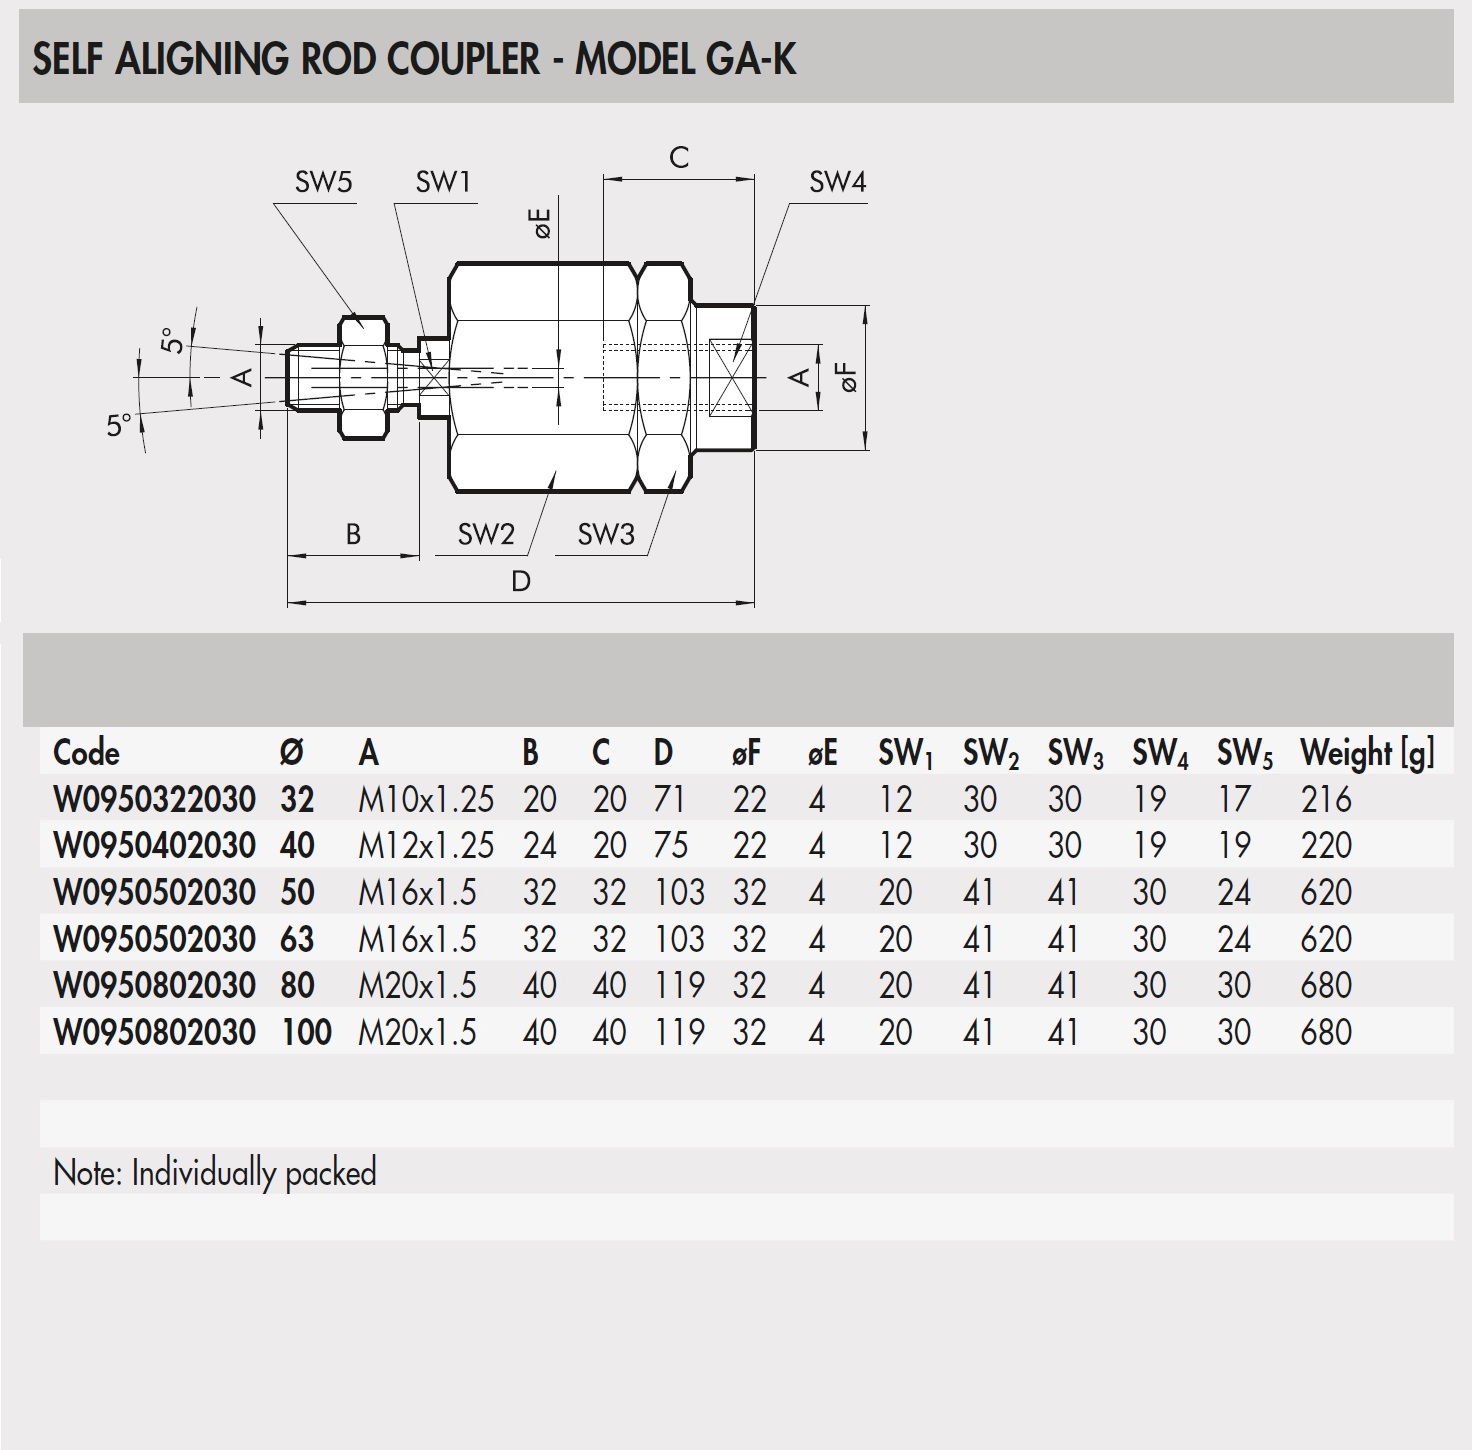 53334 w0950322030 self aligning rod coupler model gak m10x125 product family